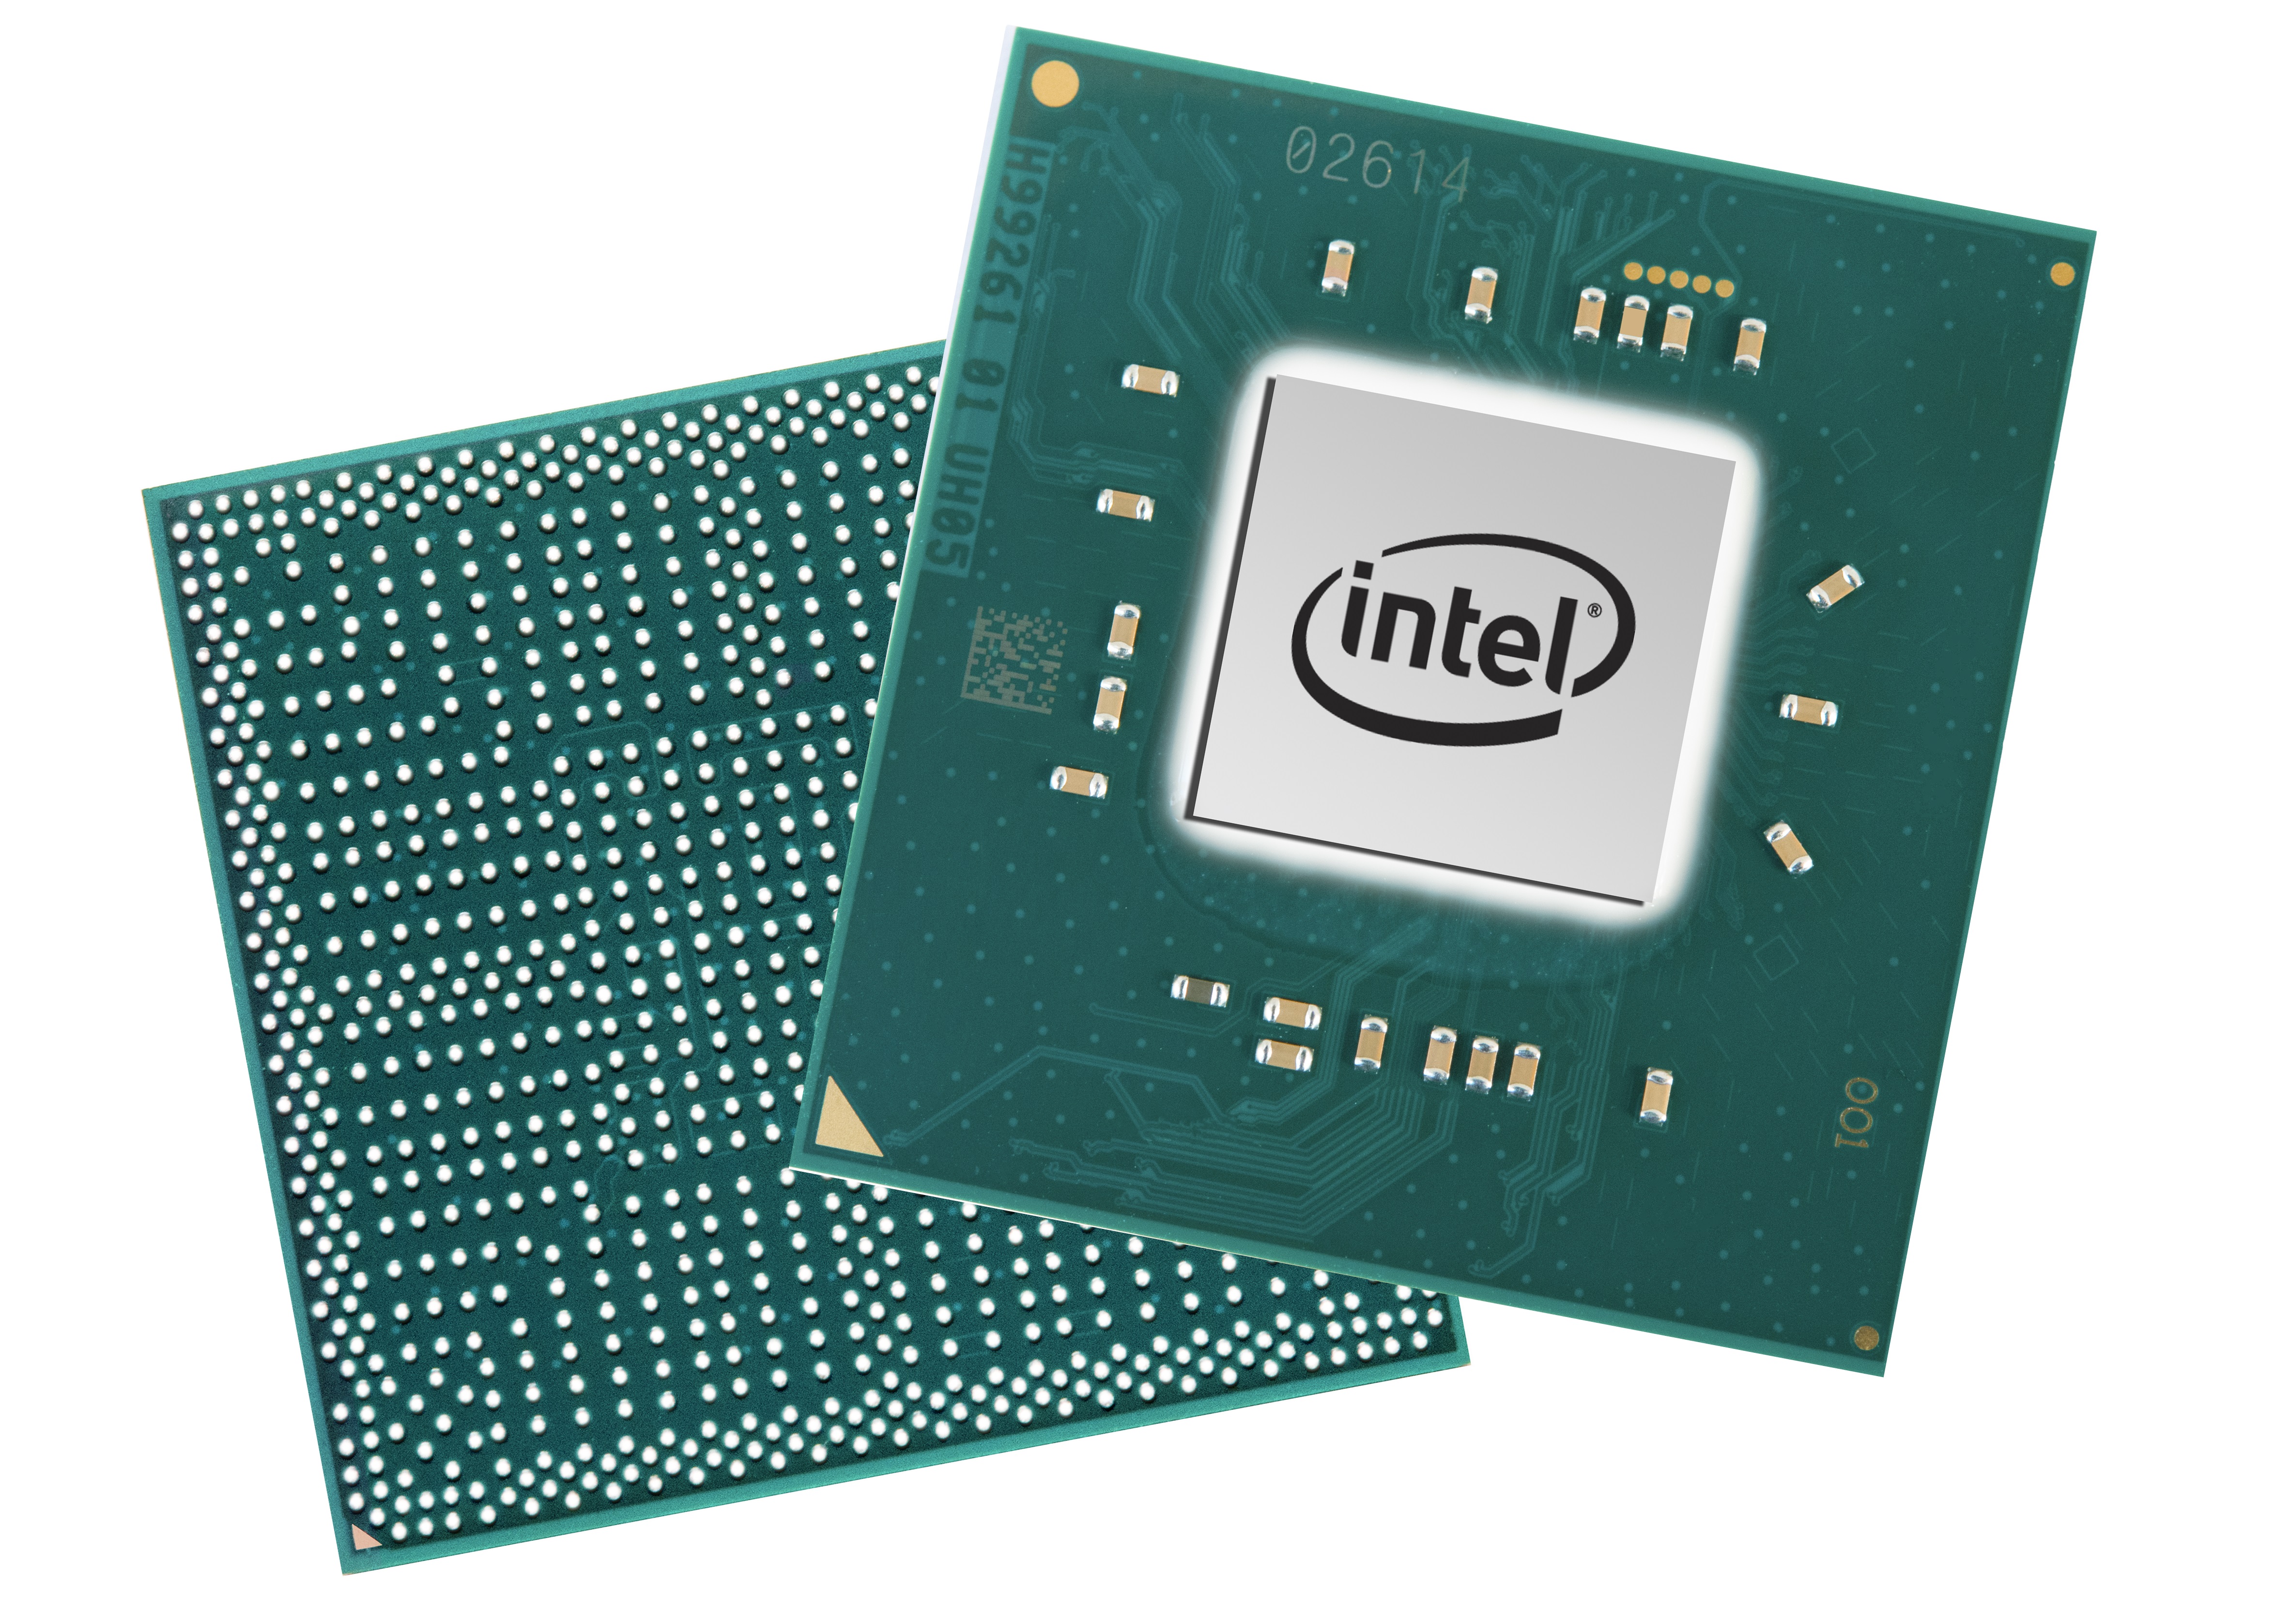 rem selecteer geeuwen Intel Celeron J4025 Processor - Benchmarks and Specs - NotebookCheck.net  Tech